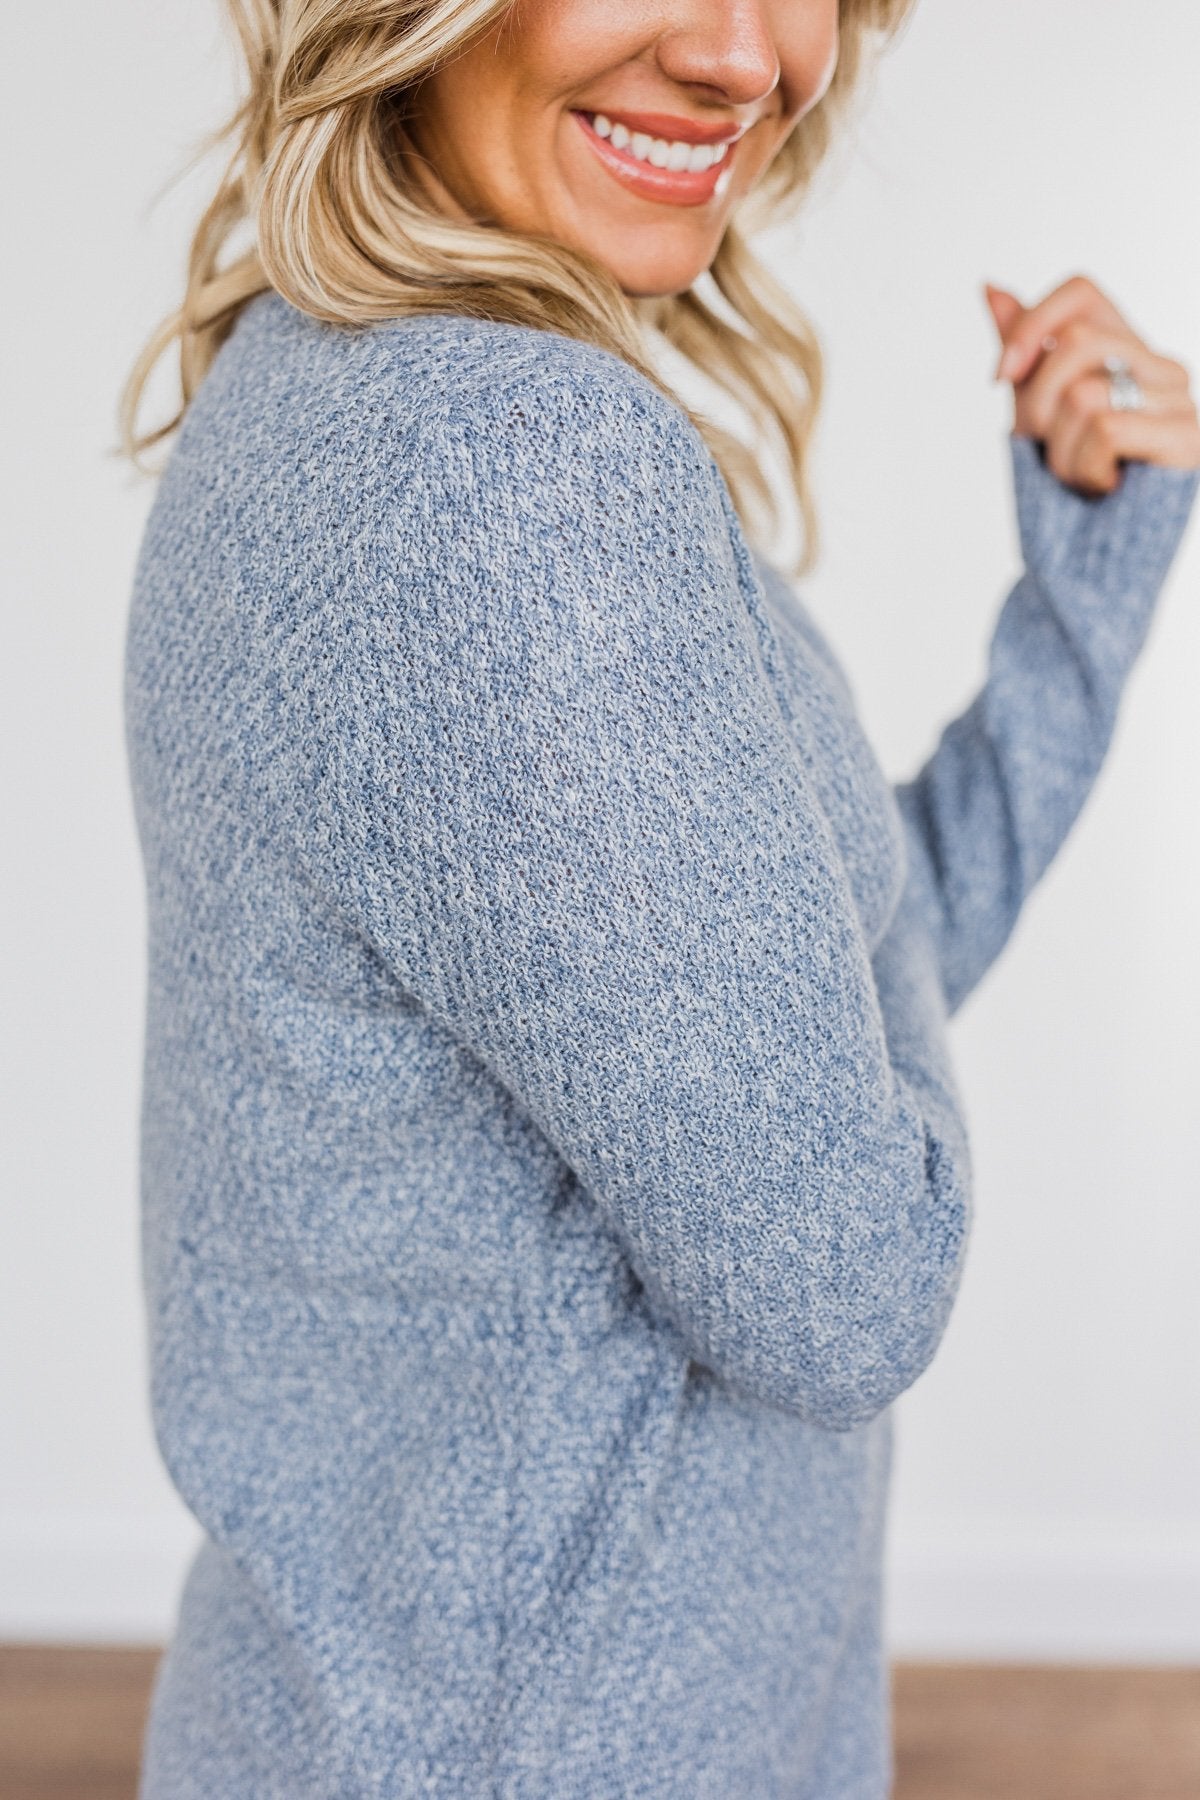 Runway Beauty Knit Sweater- Light Blue